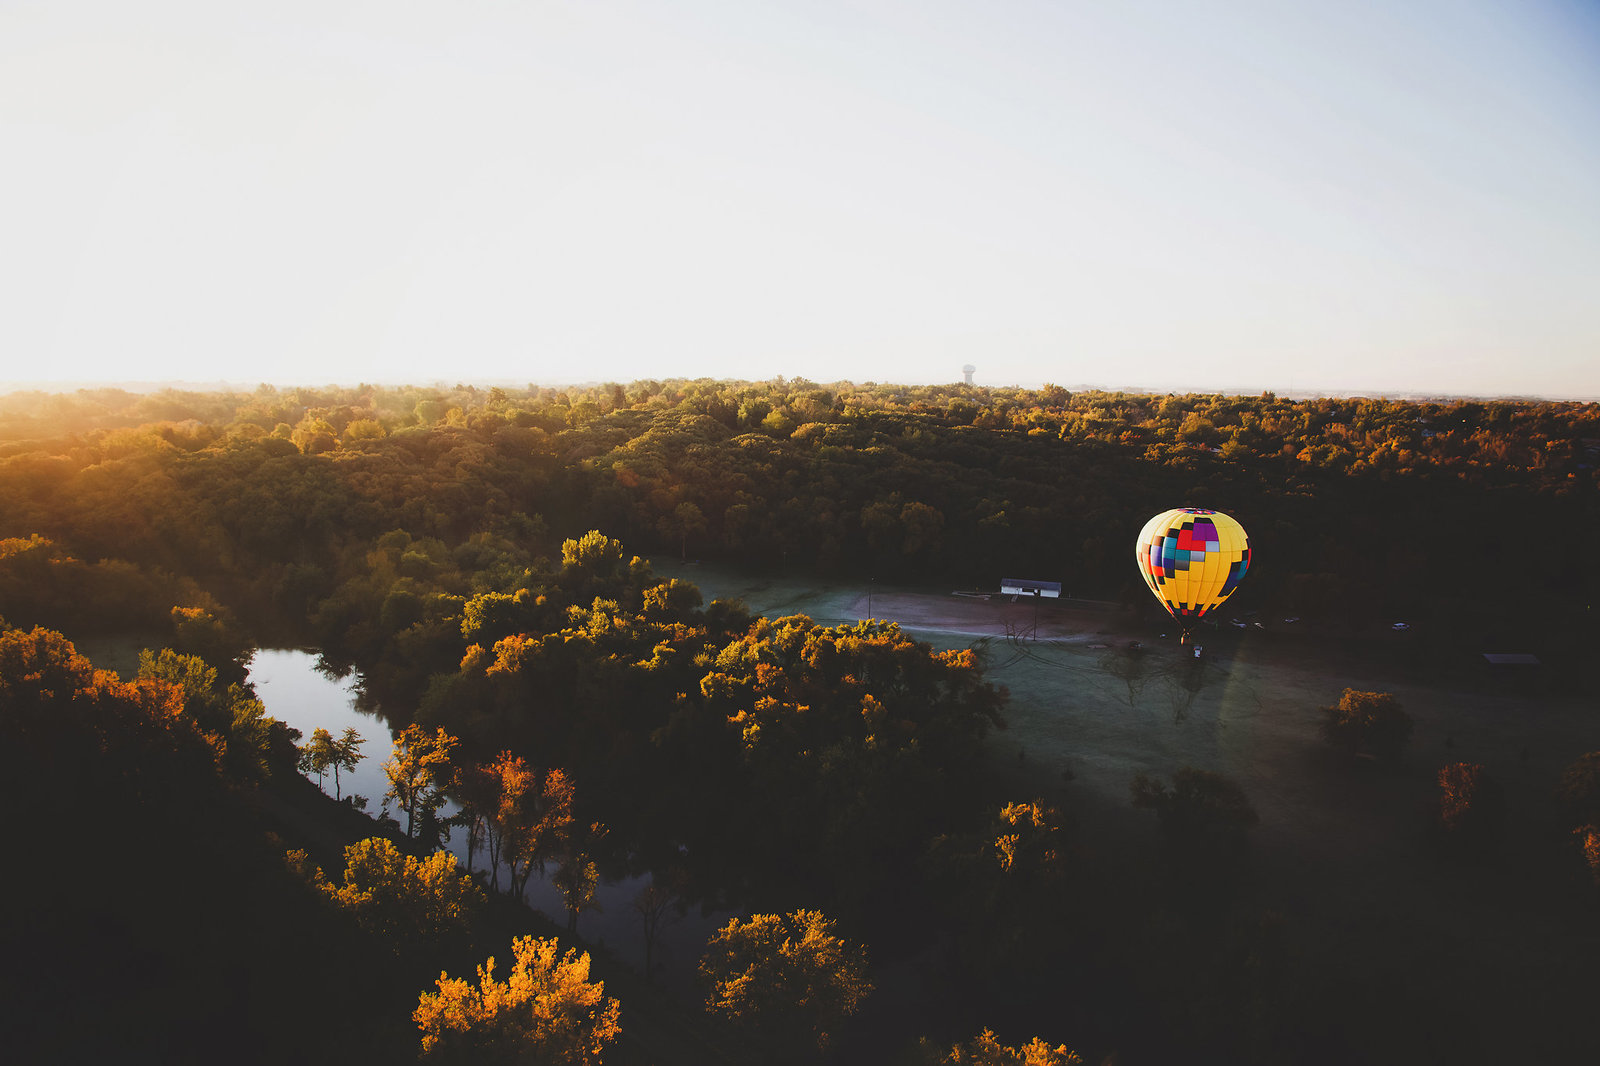 South Dakota sunrise from a hot air balloon